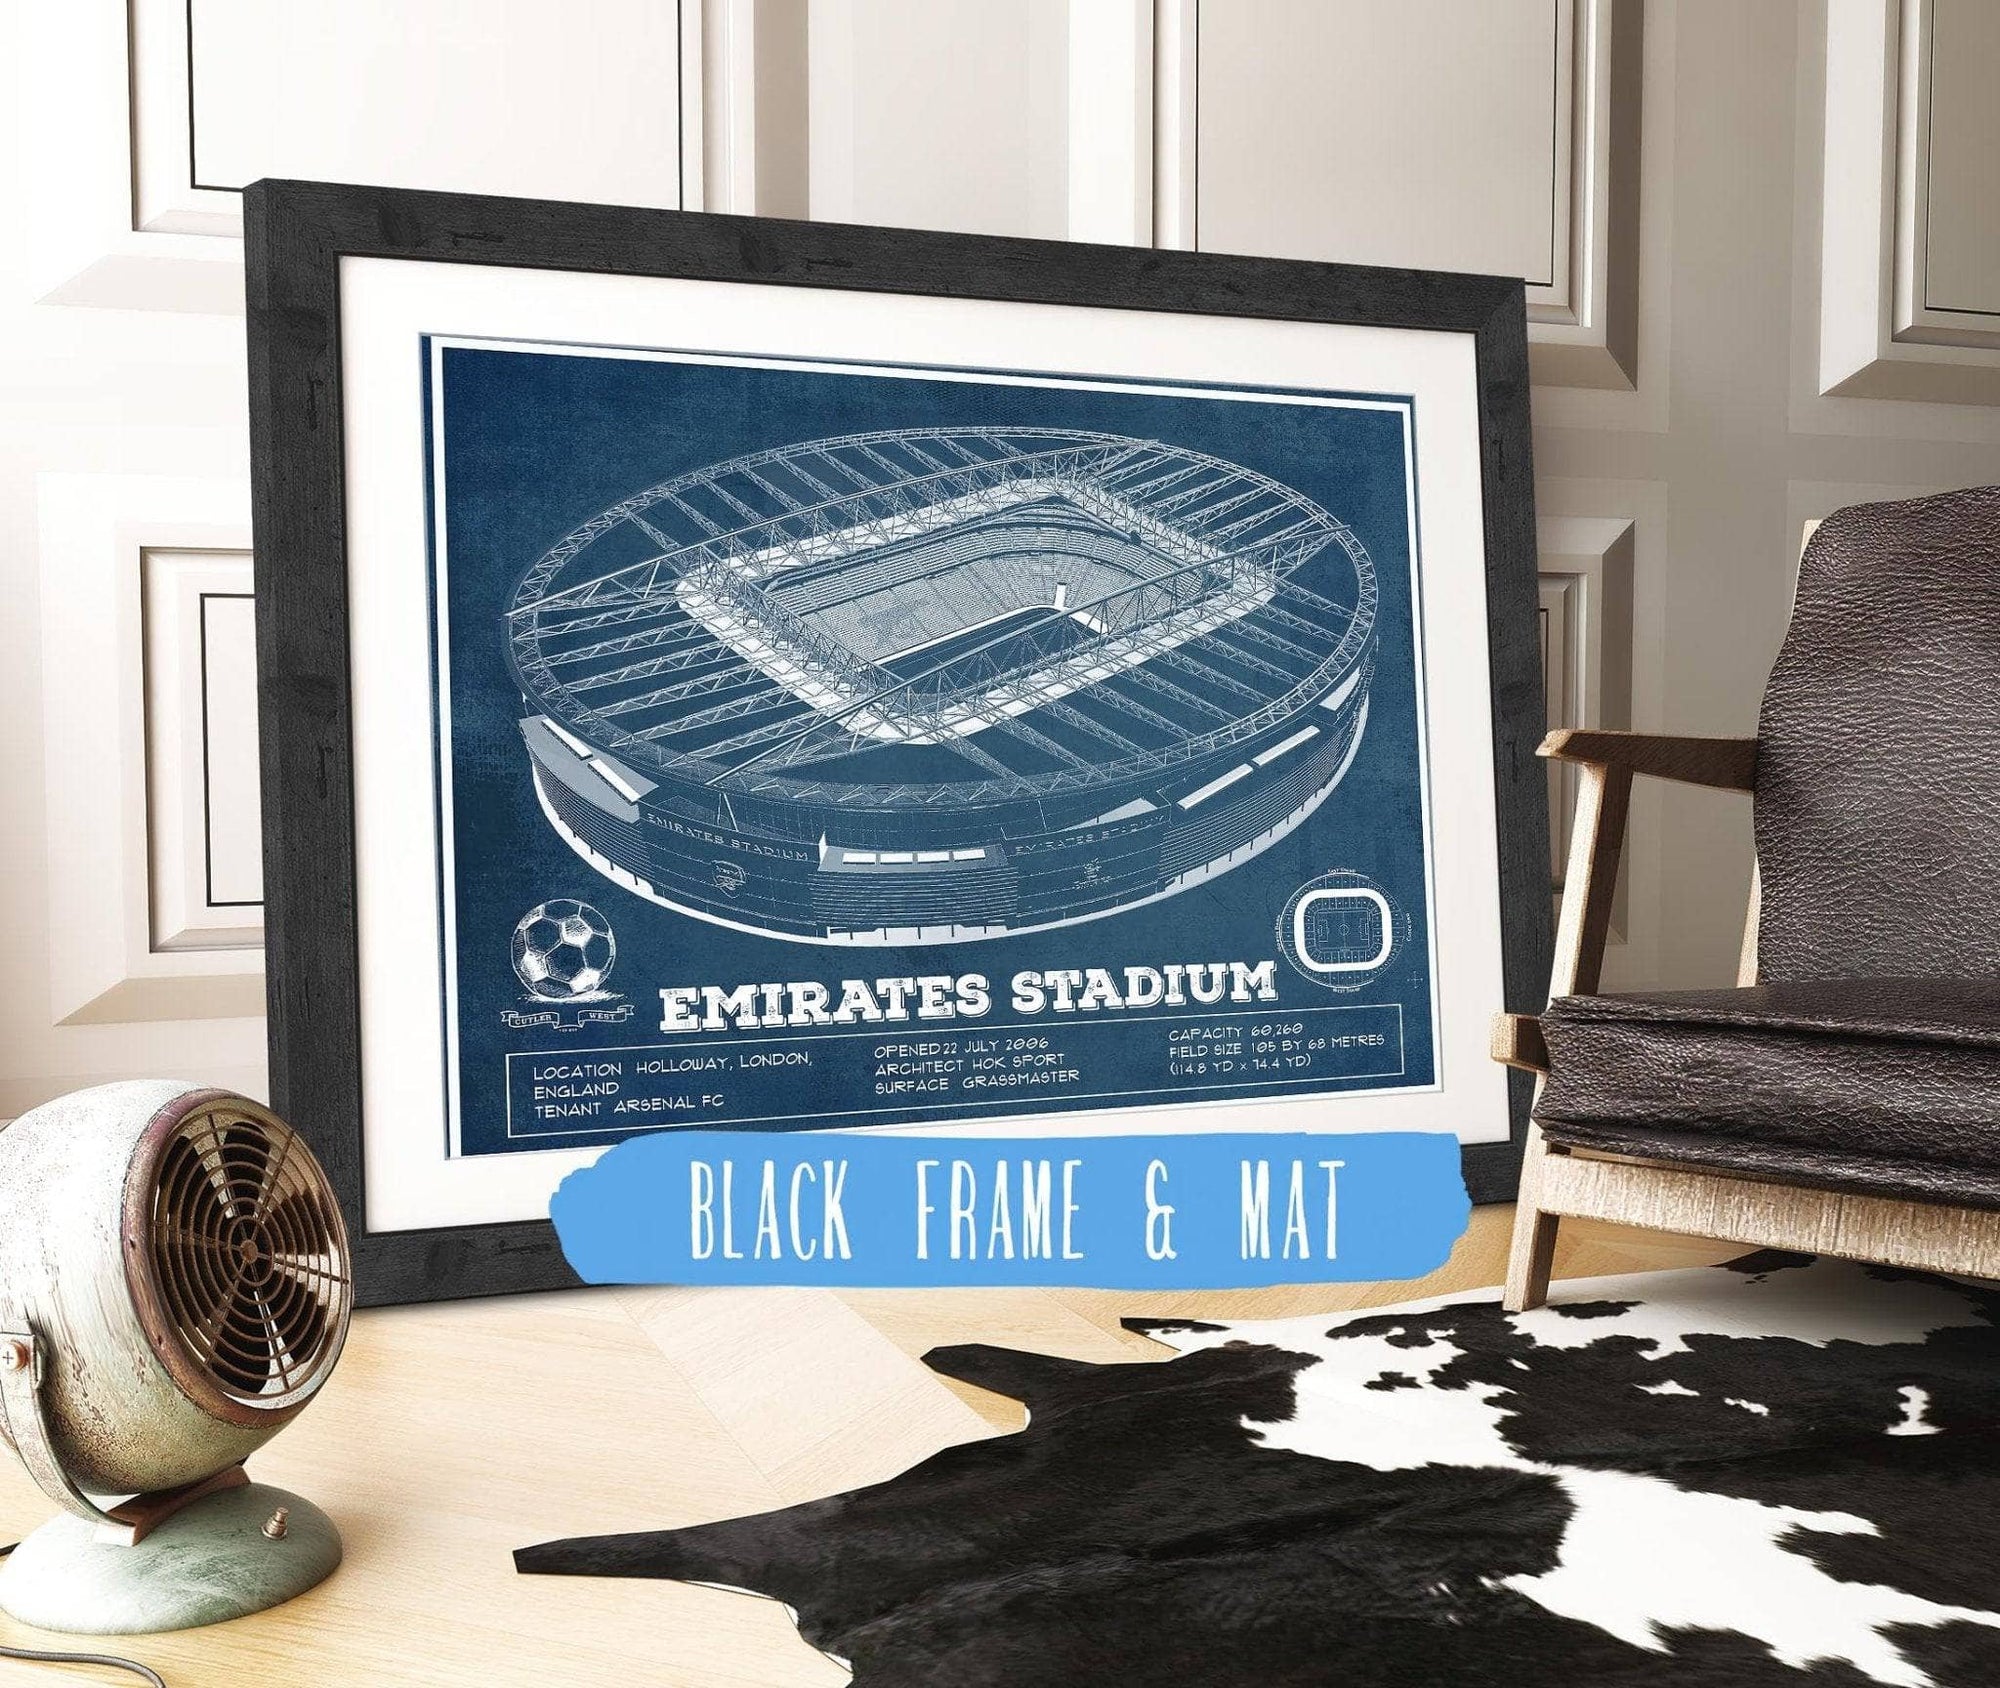 Cutler West Soccer Collection 14" x 11" / Black Frame & Mat Arsenal Football Club - Emirates Stadium Soccer Print 235353086